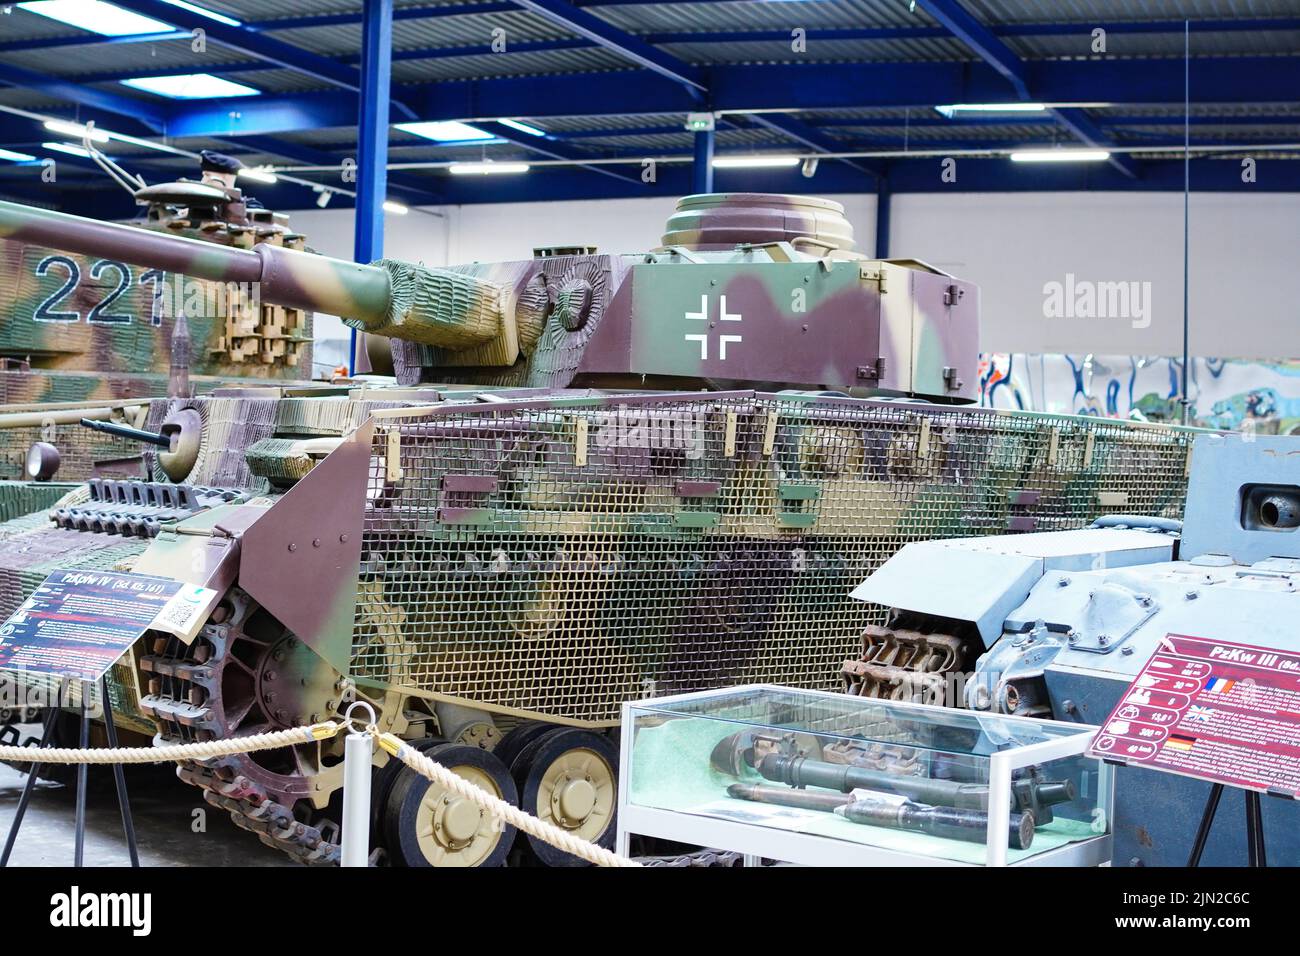 Panzer IV, German tank, musée des Blindes, Saumur, France Stock Photo